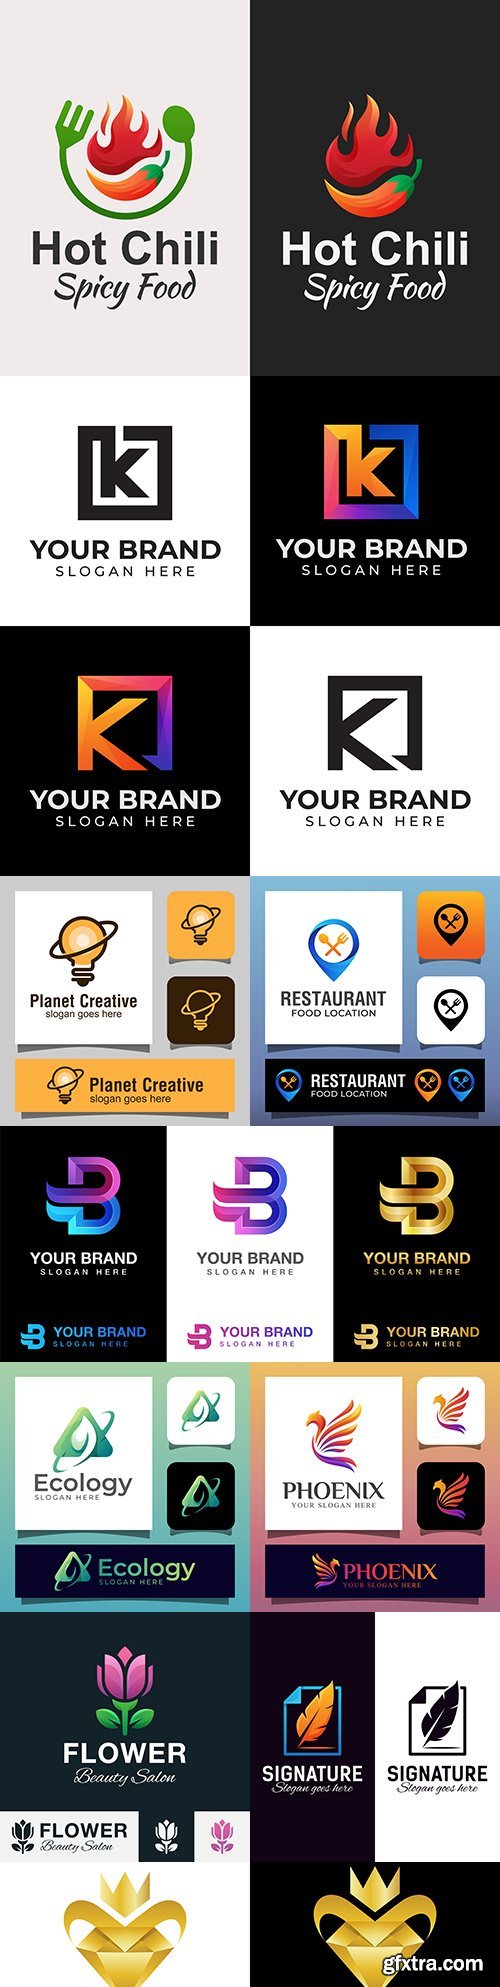 Brand name company logos business corporate design 82